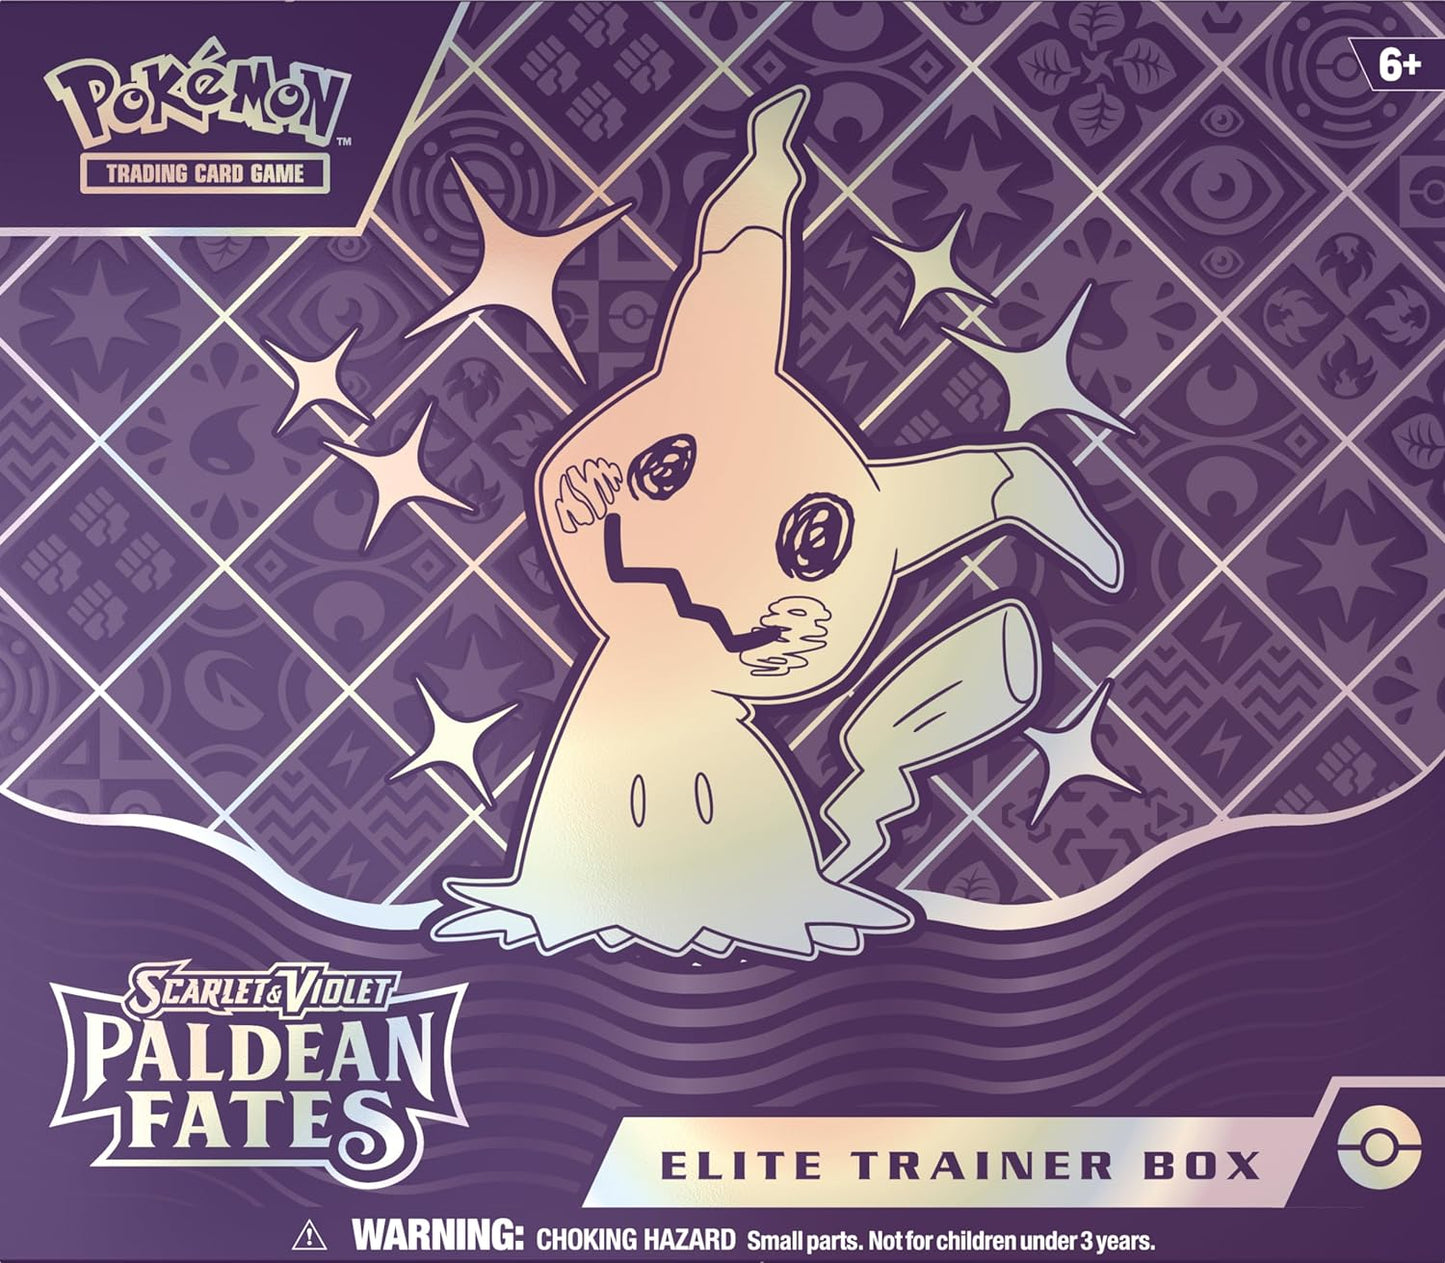 Pokemon - Scarlet & Violet: Paladean Fates - Elite Trainer Box